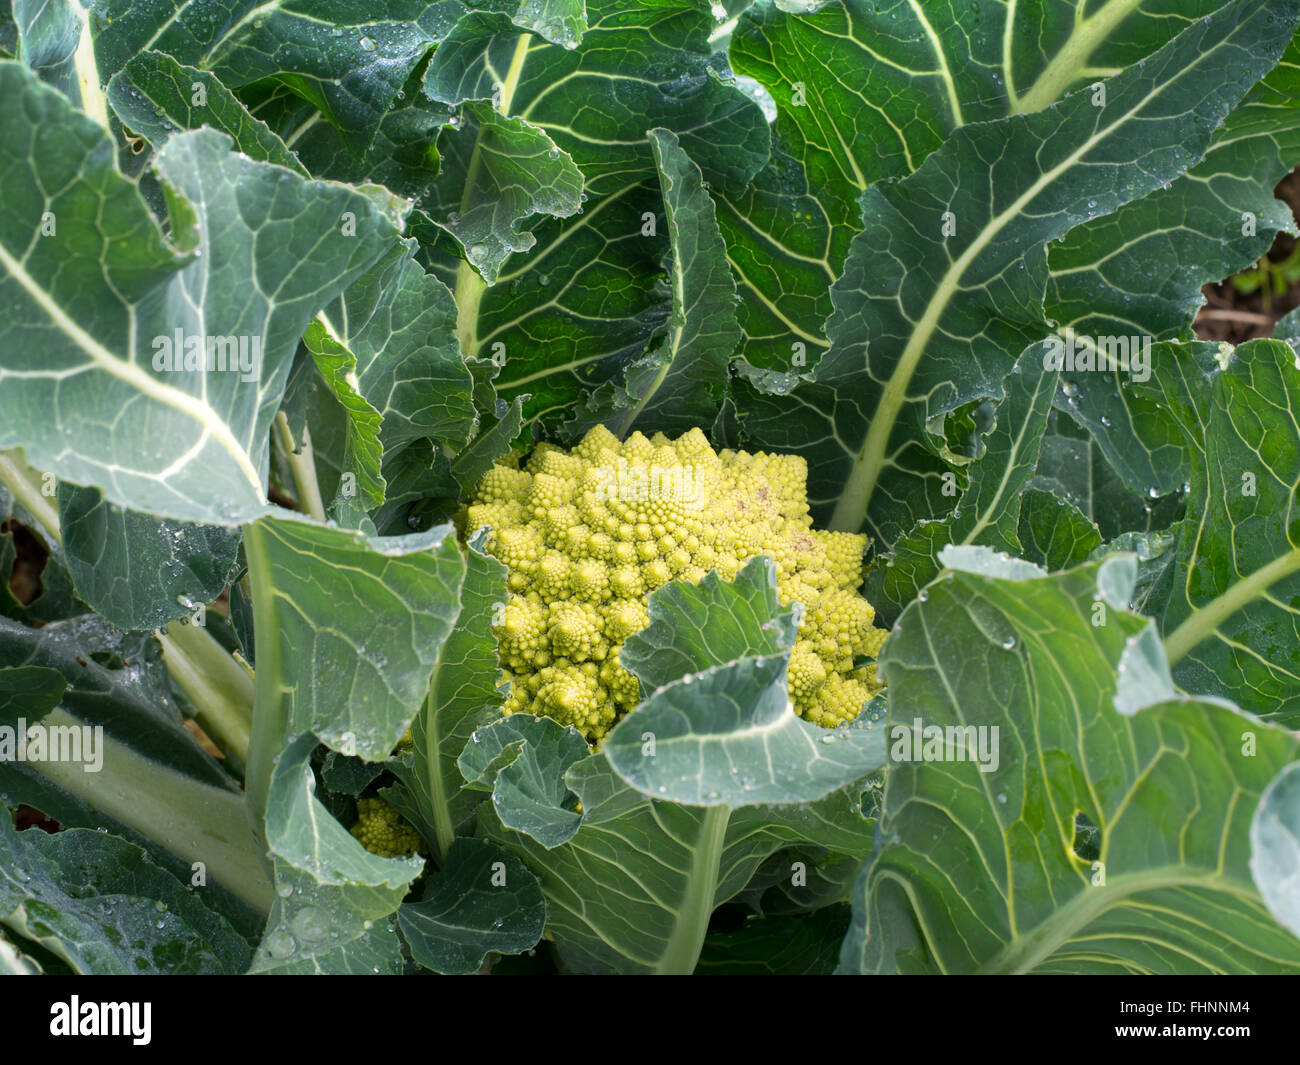 Broccoflower - Romanesco green cauliflower. Grown in my garden! Stock Photo